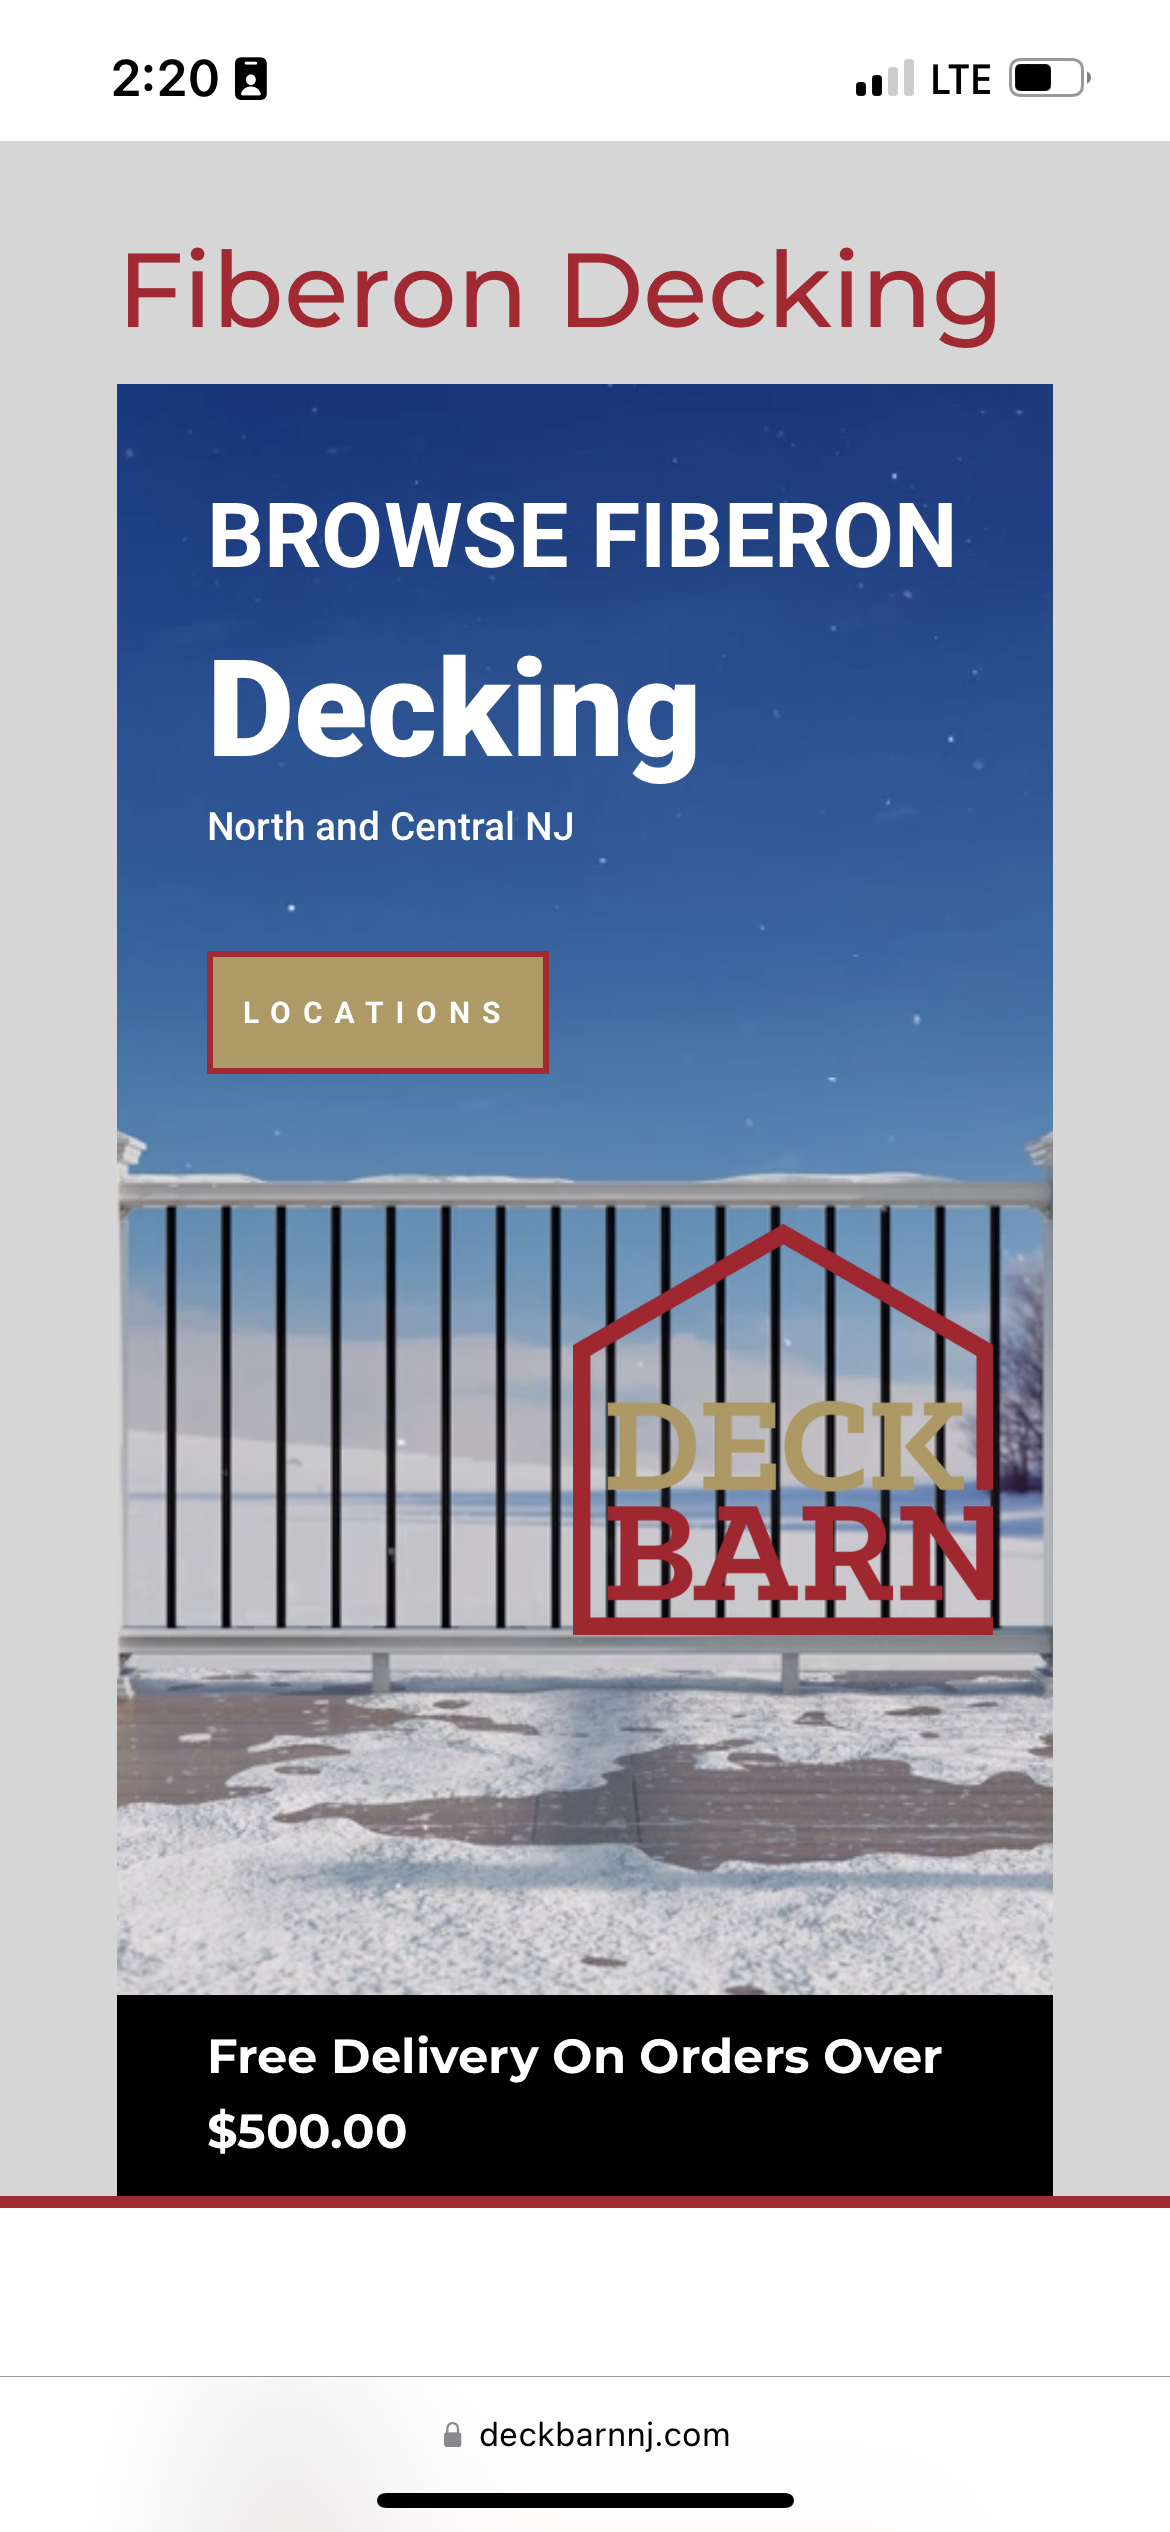 Deck Barn website by Web Logic SEO